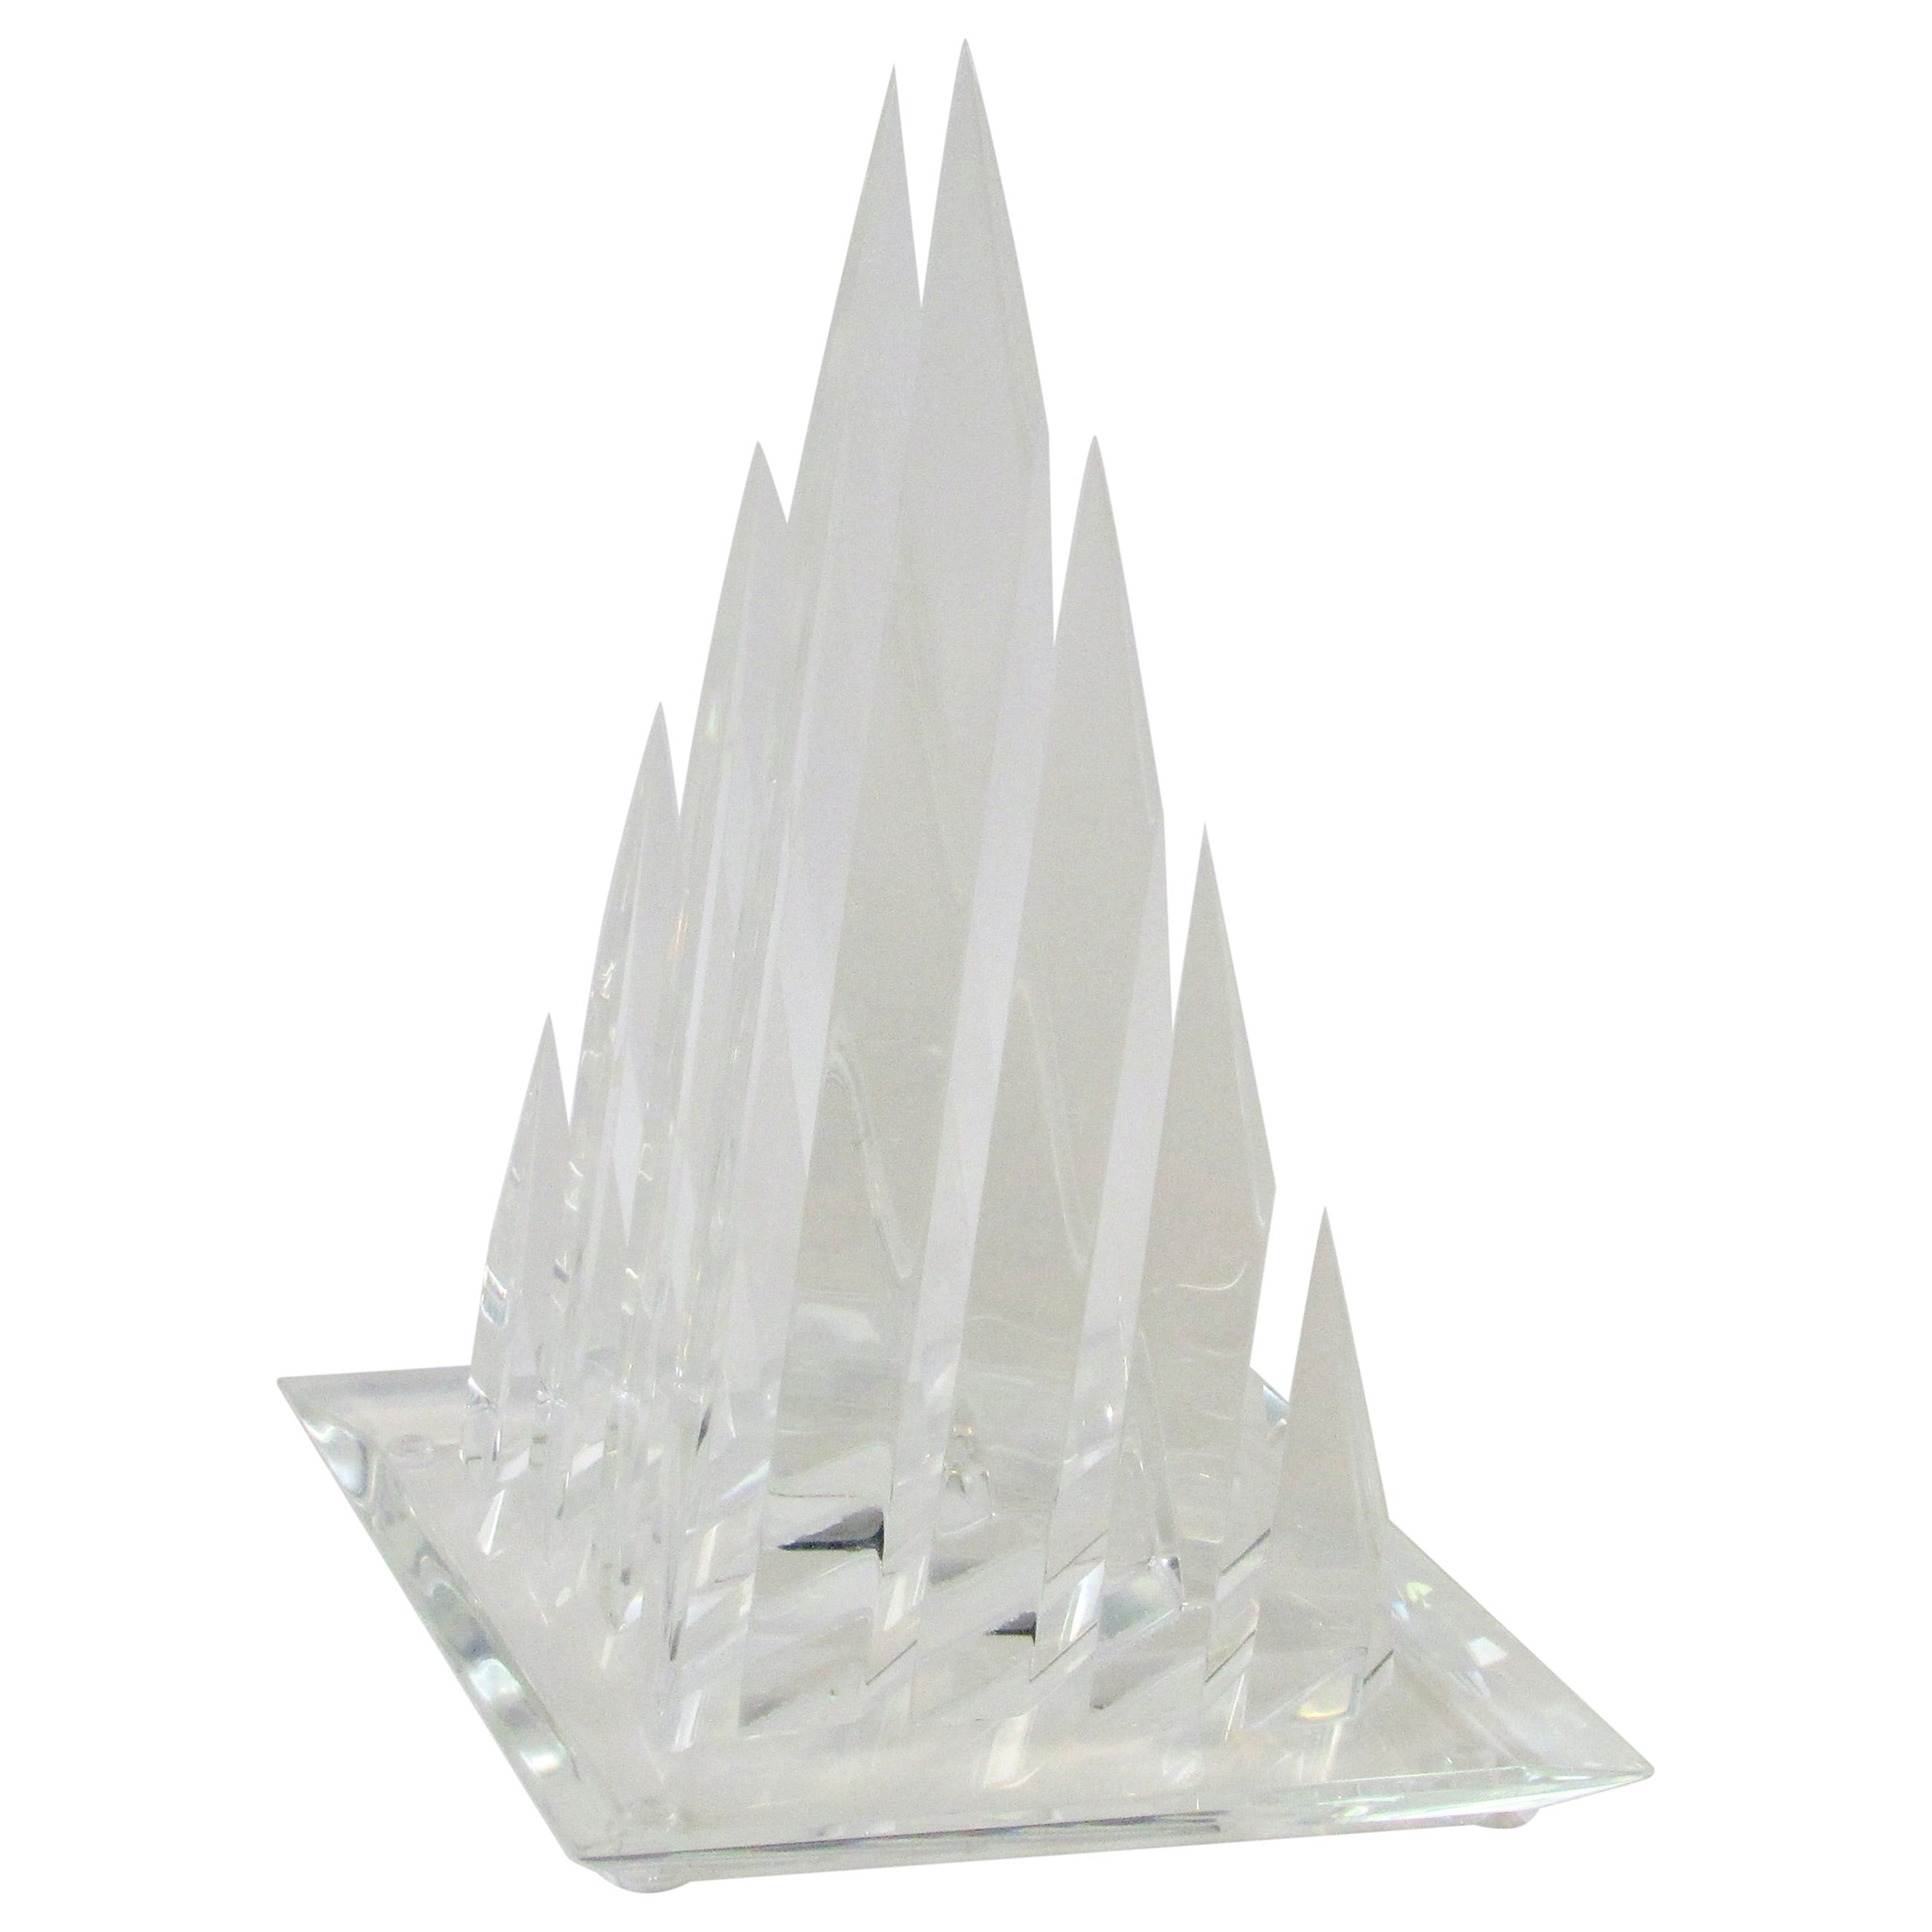 Hivo Van Teal Segmented Lucite Pyramid, Triangle Sculpture